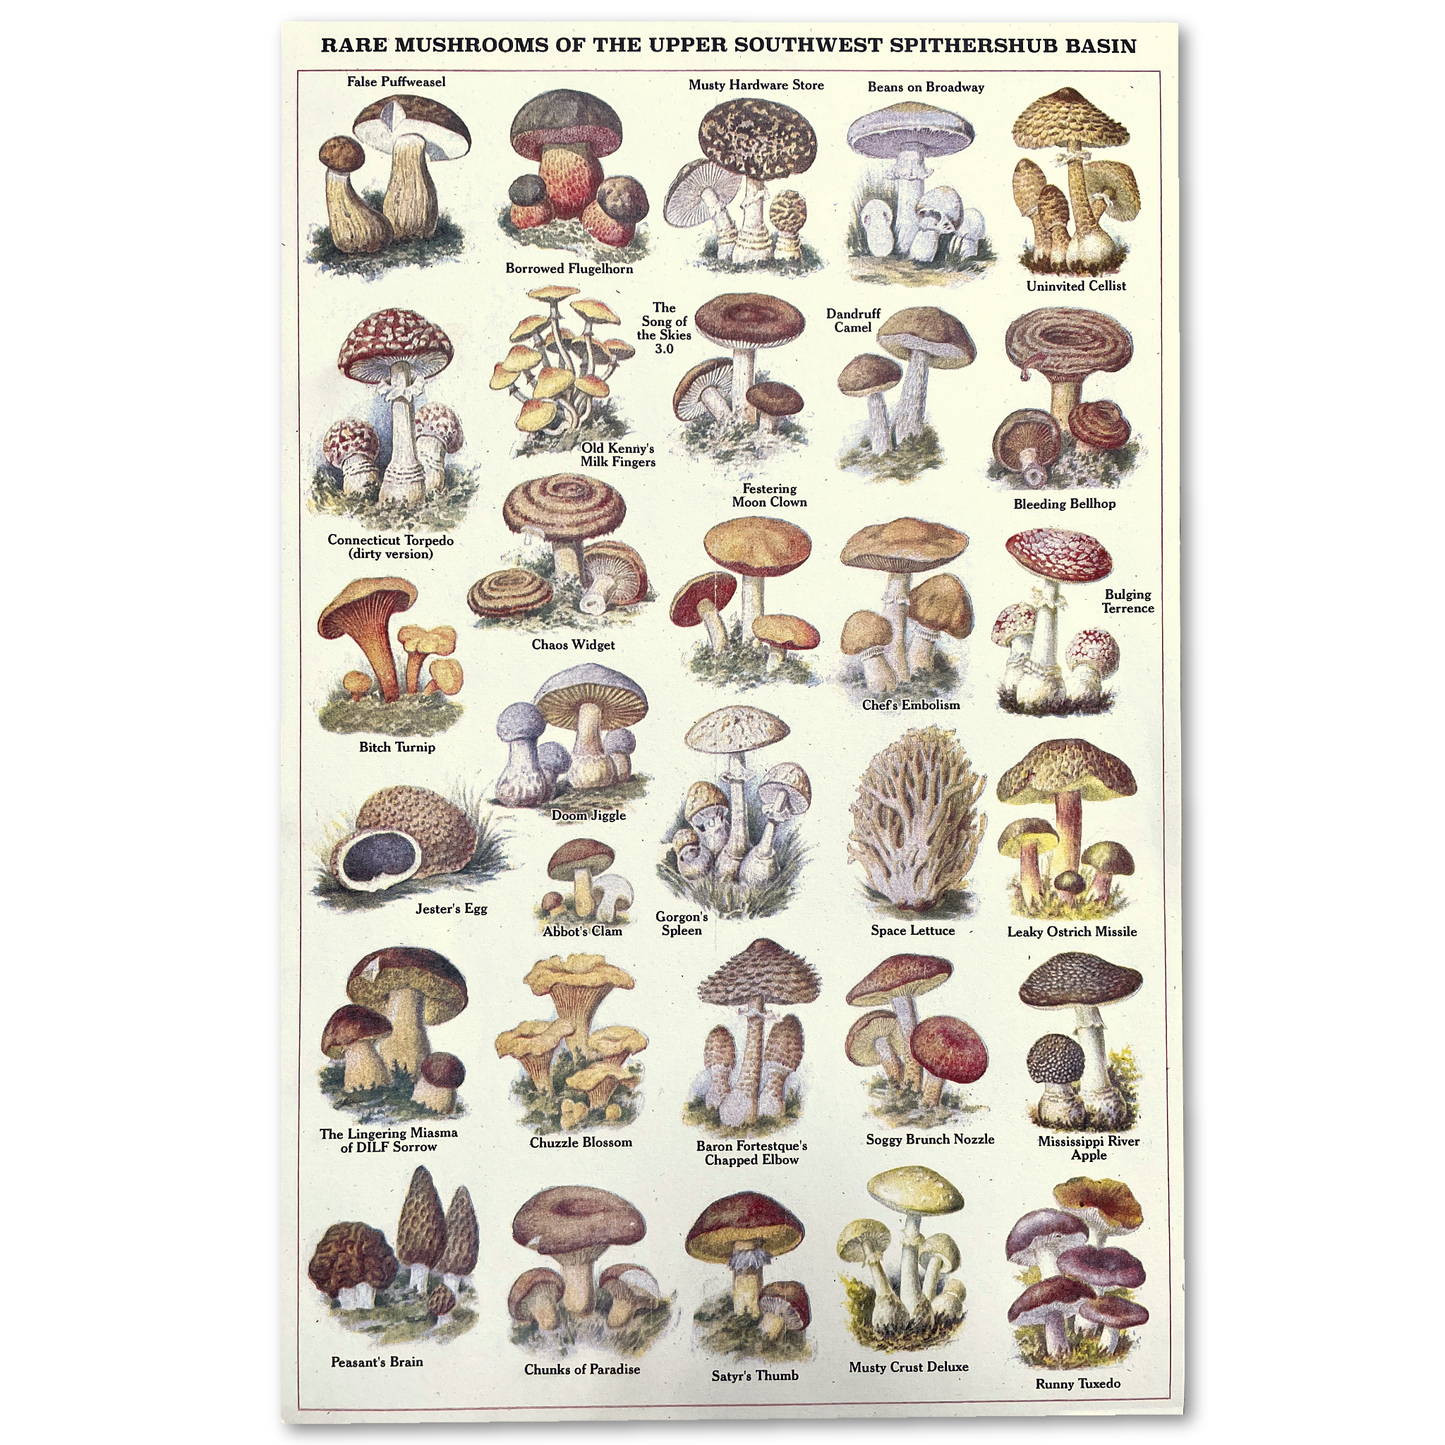 "Rare Mushrooms" Risograph Poster